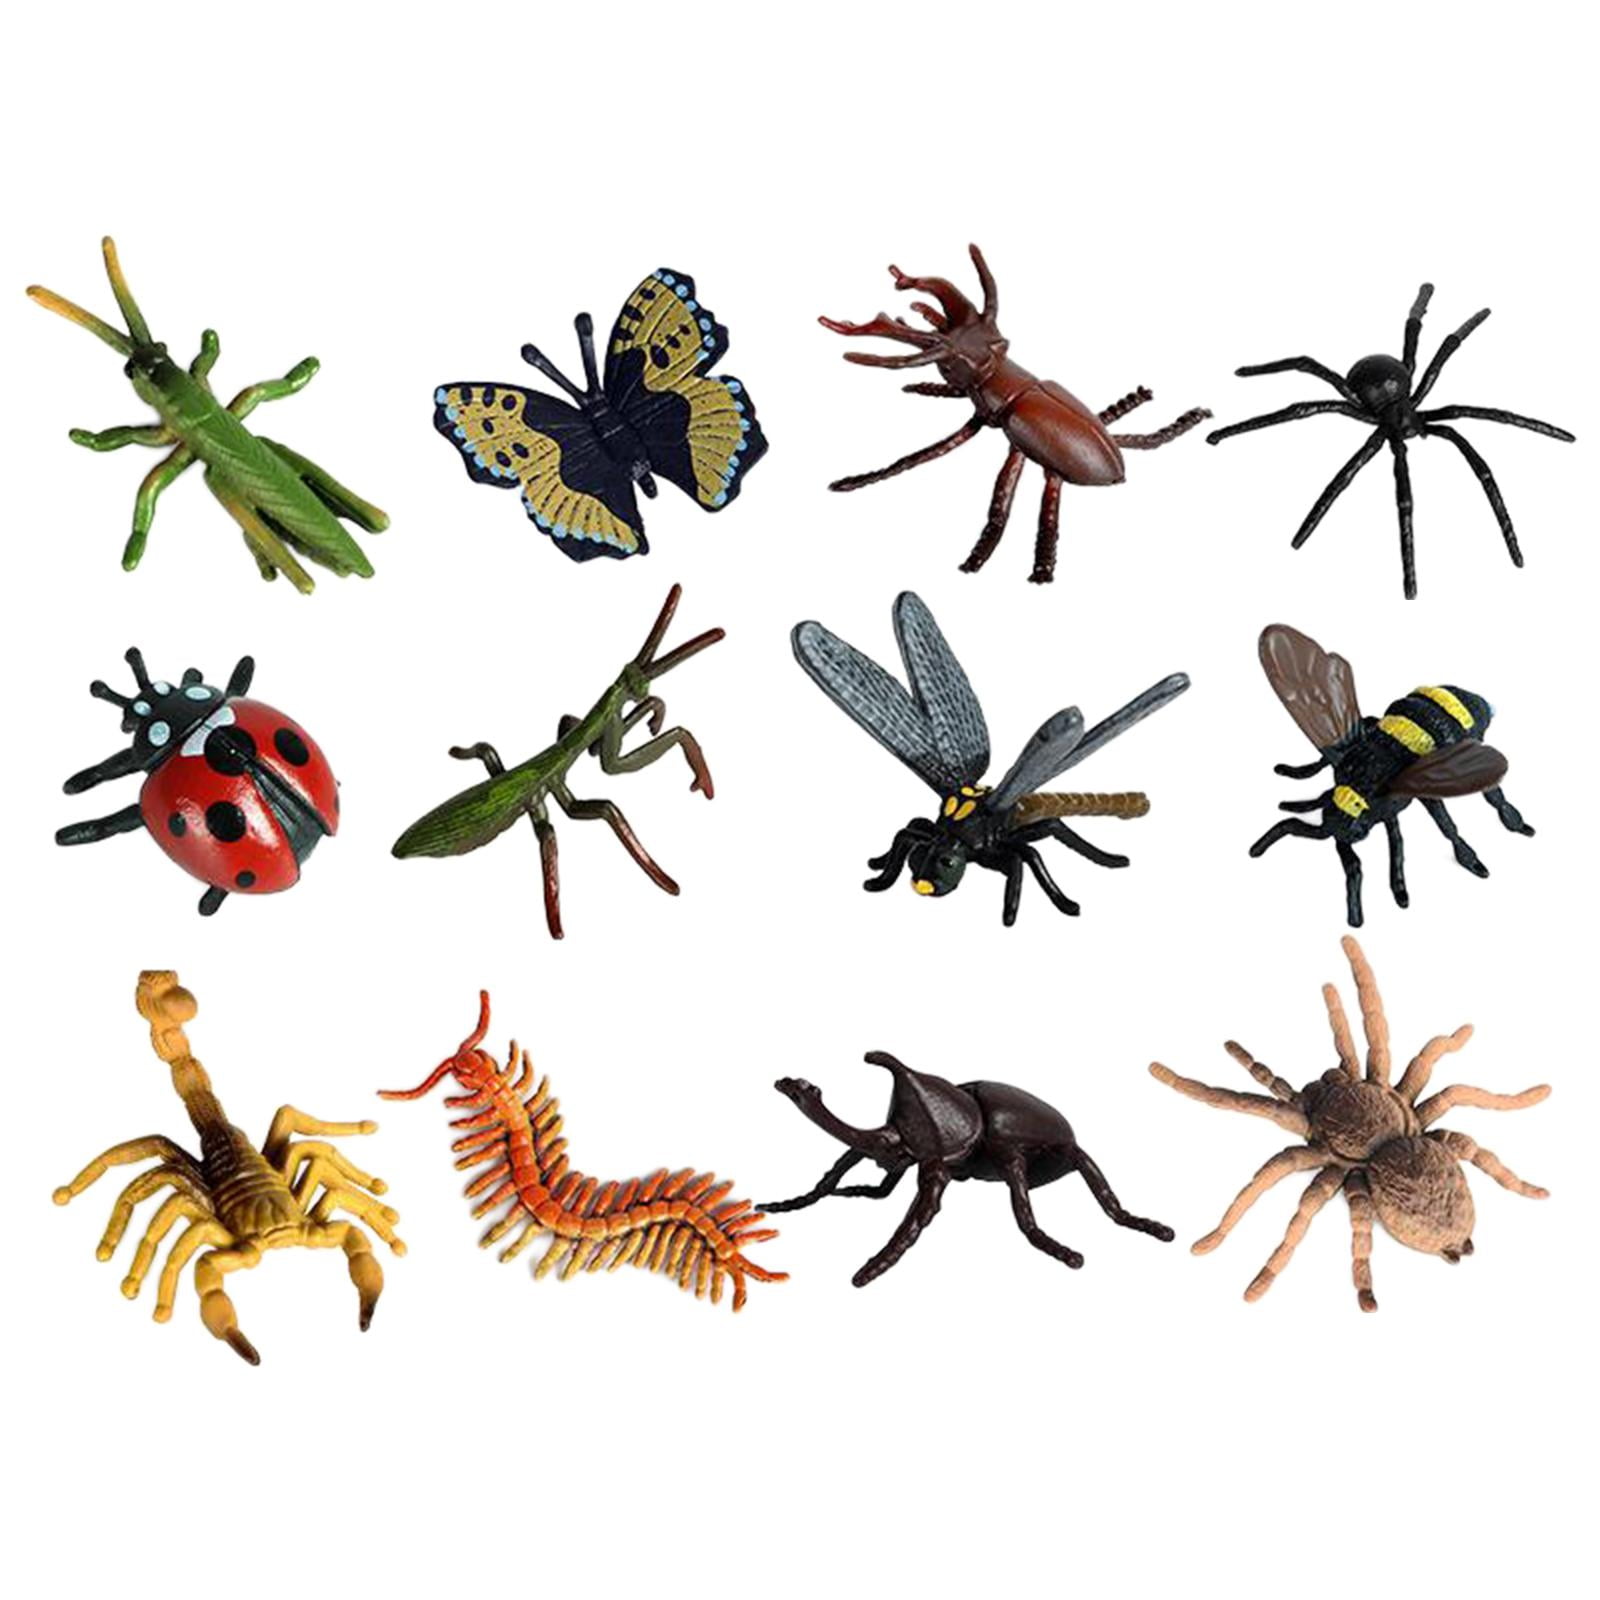 3.6 Inch Yellow Scorpion Wild Animal Model Figure Statue Kids Toy Gift 